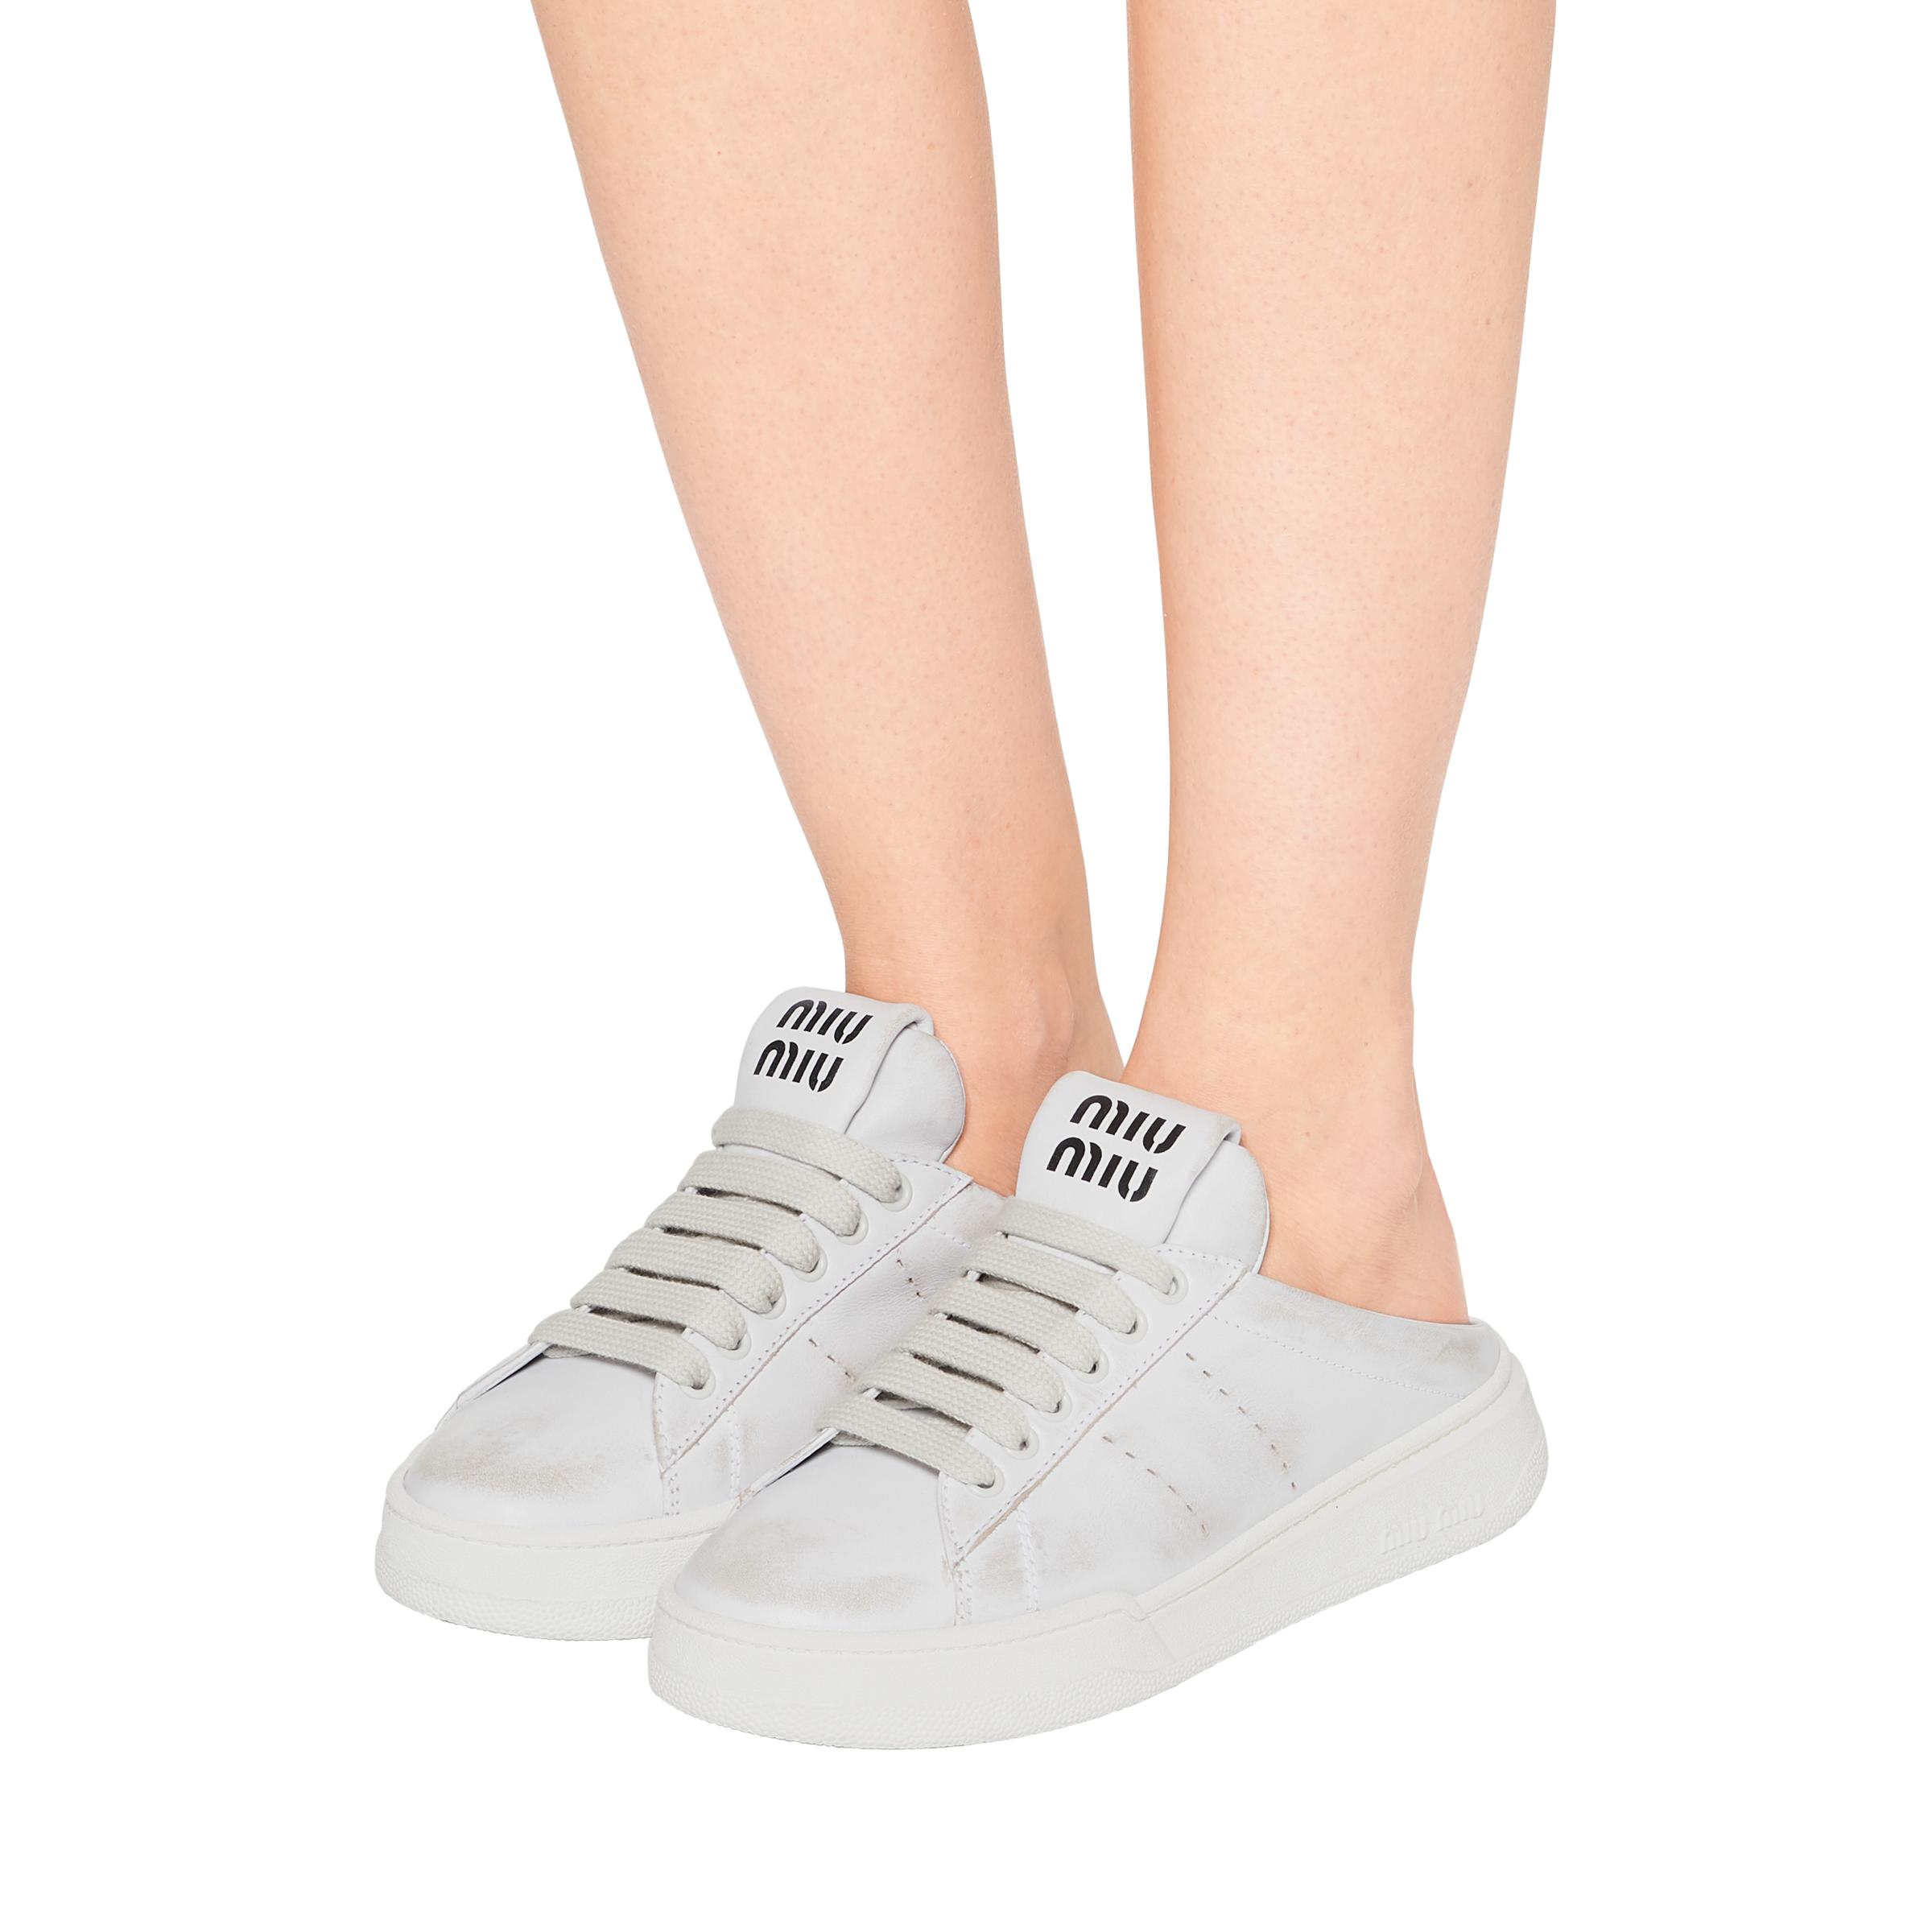 Miu Miu Bleached Leather Sneakers in White | Lyst